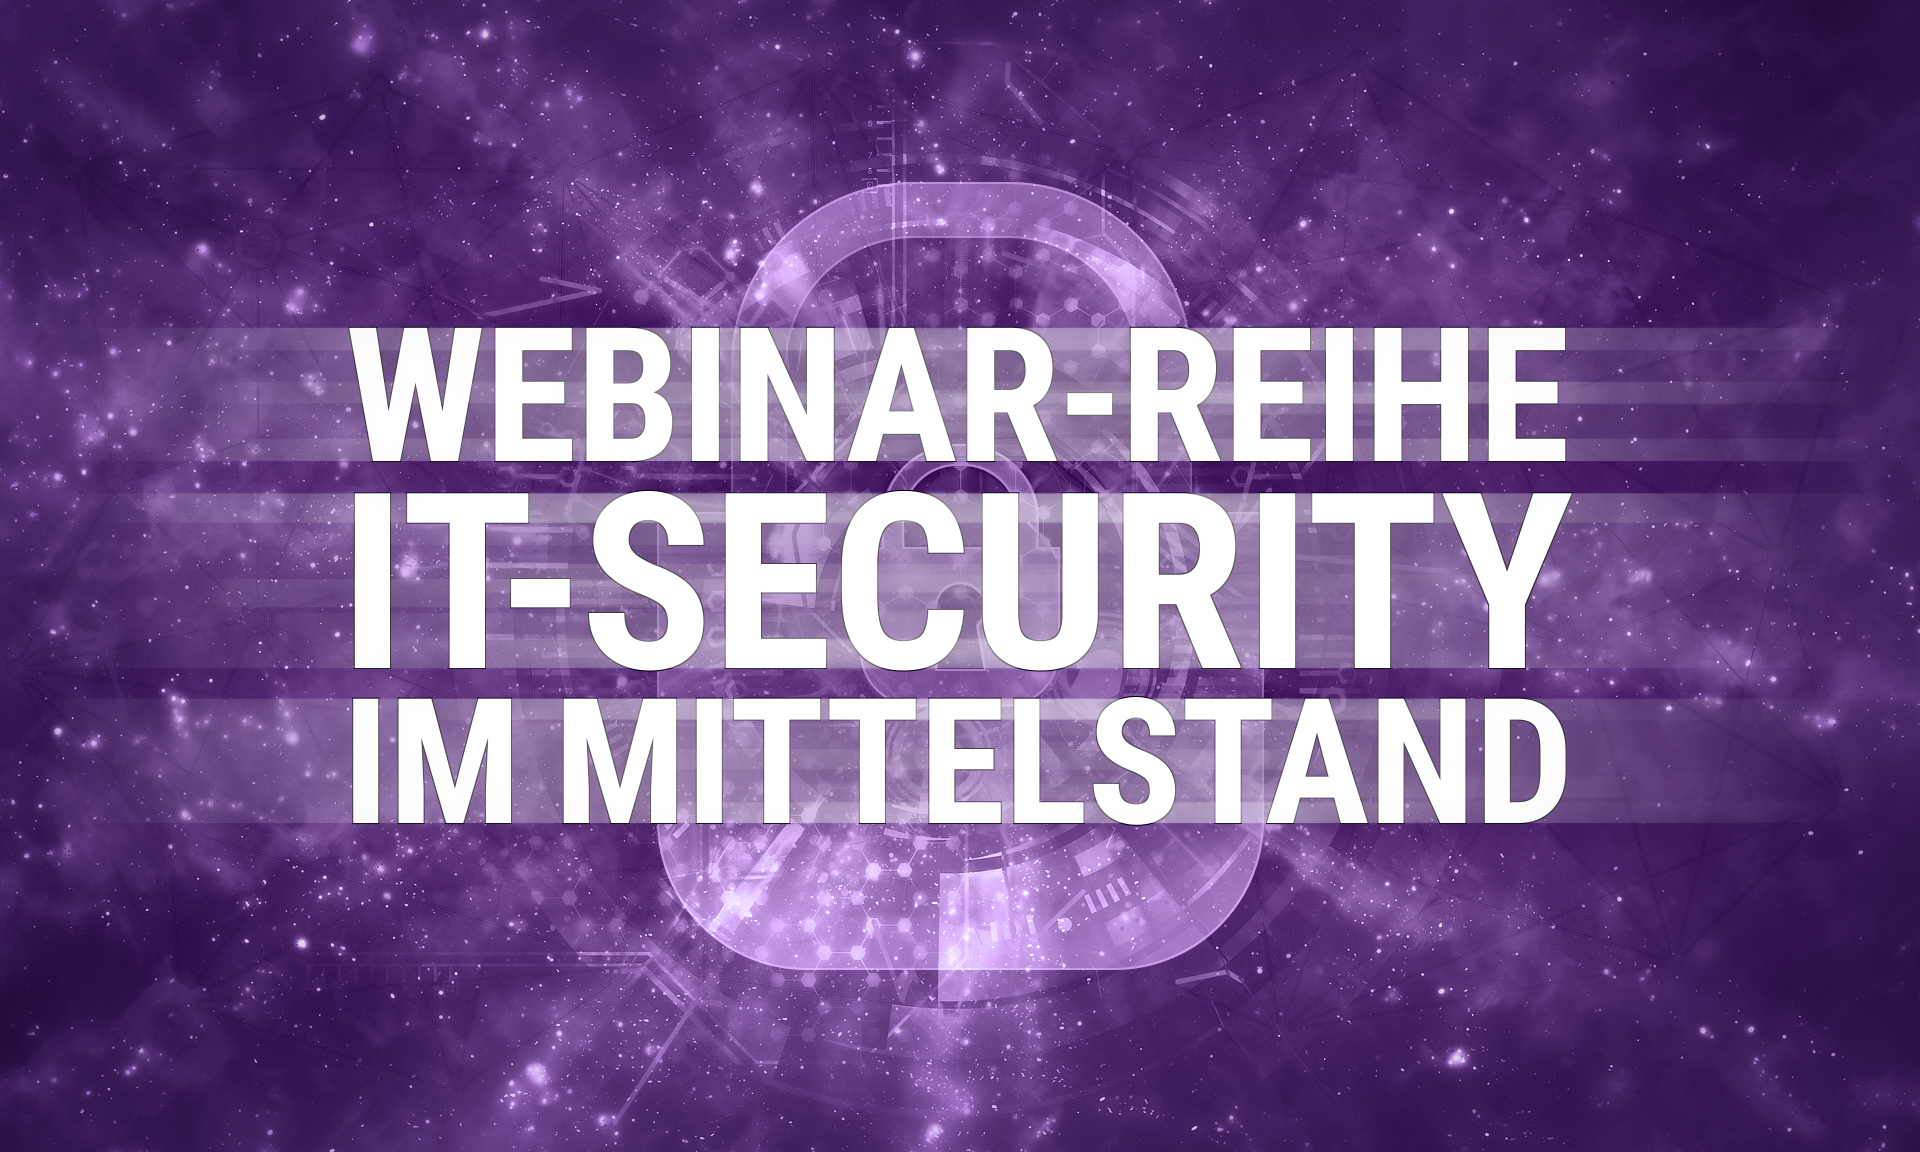 webinar it-security mittelstand hybrides event